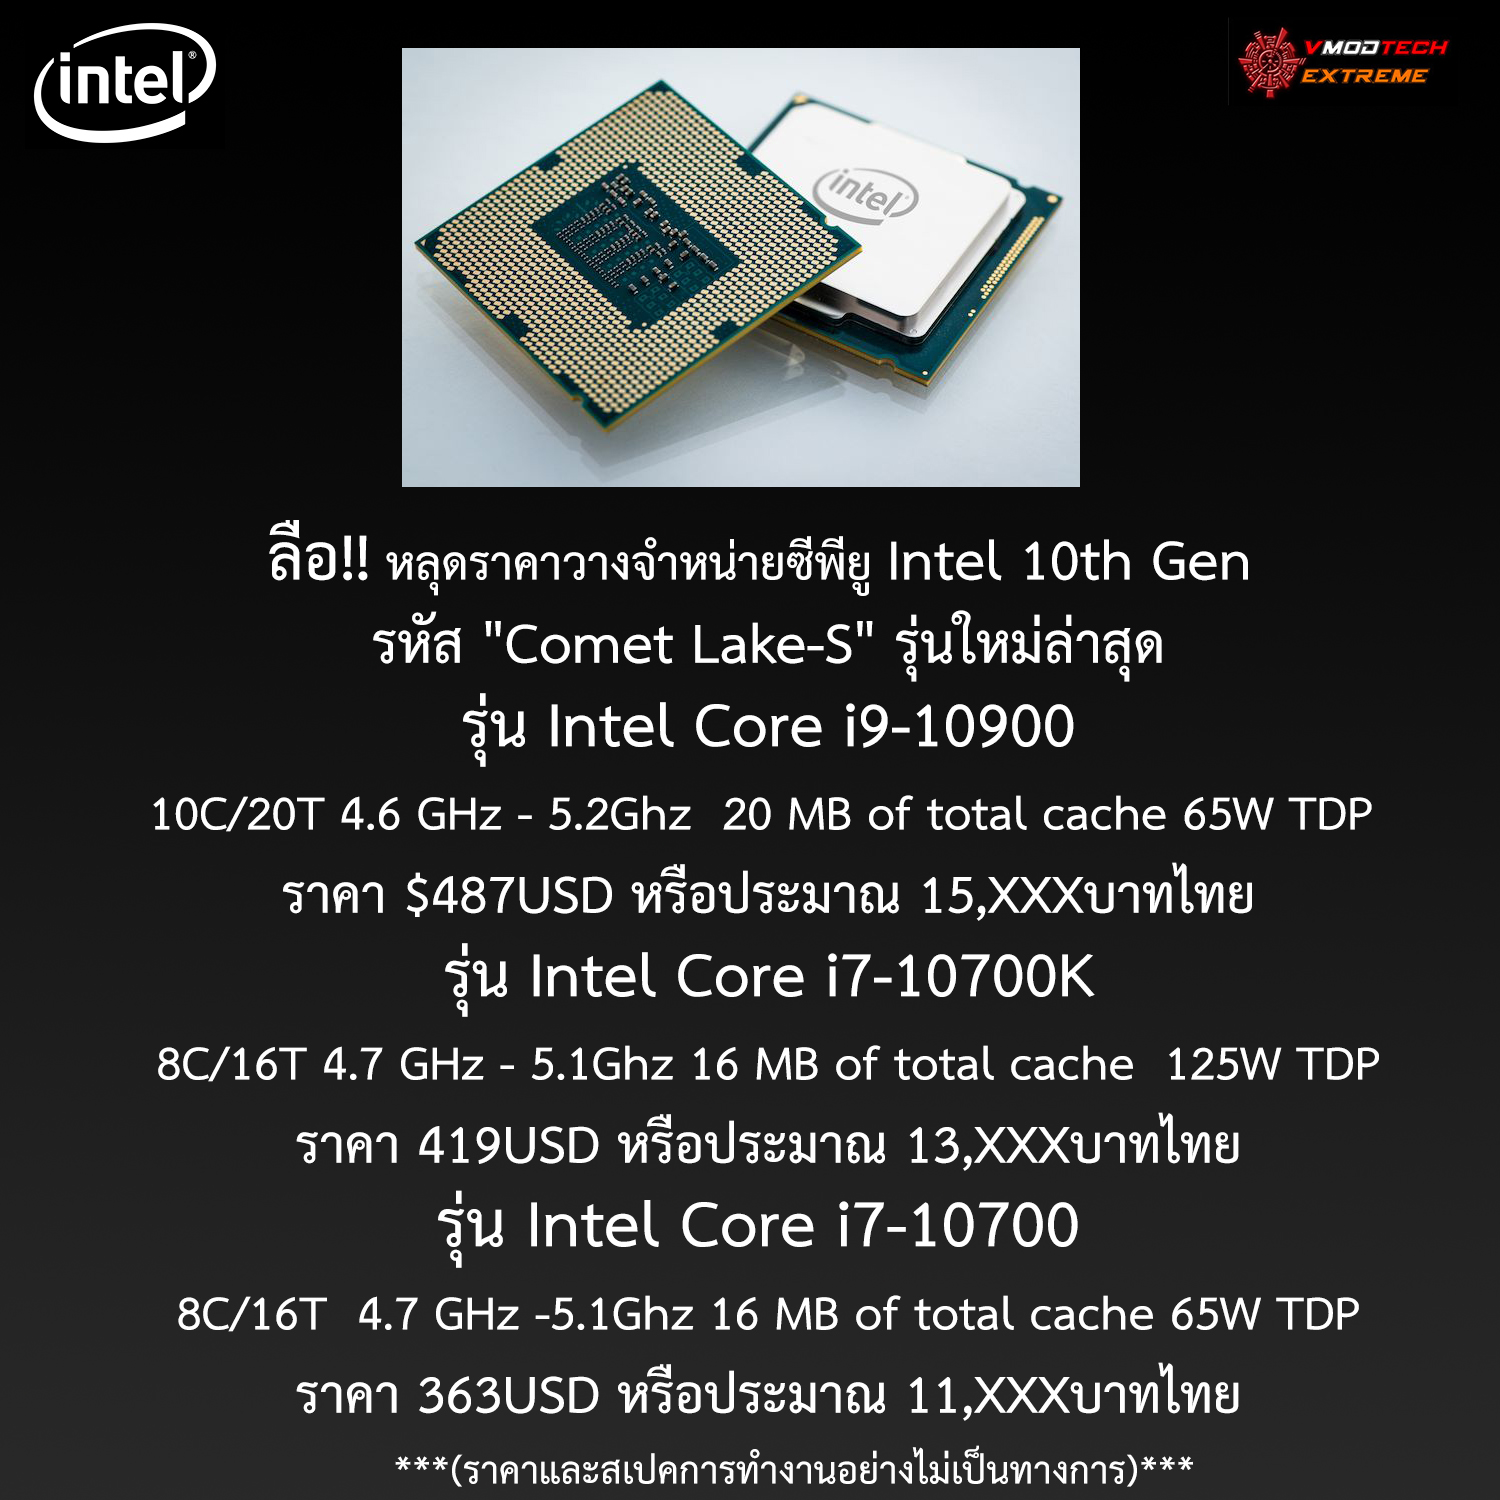 intel comet lake s price หลุดราคาวางจำหน่ายซีพียู Intel 10th Gen Comet Lake S ในรุ่น Intel Core i9 10900 , Core i7 10700K , Core i7 10700 อย่างไม่เป็นทางการ 